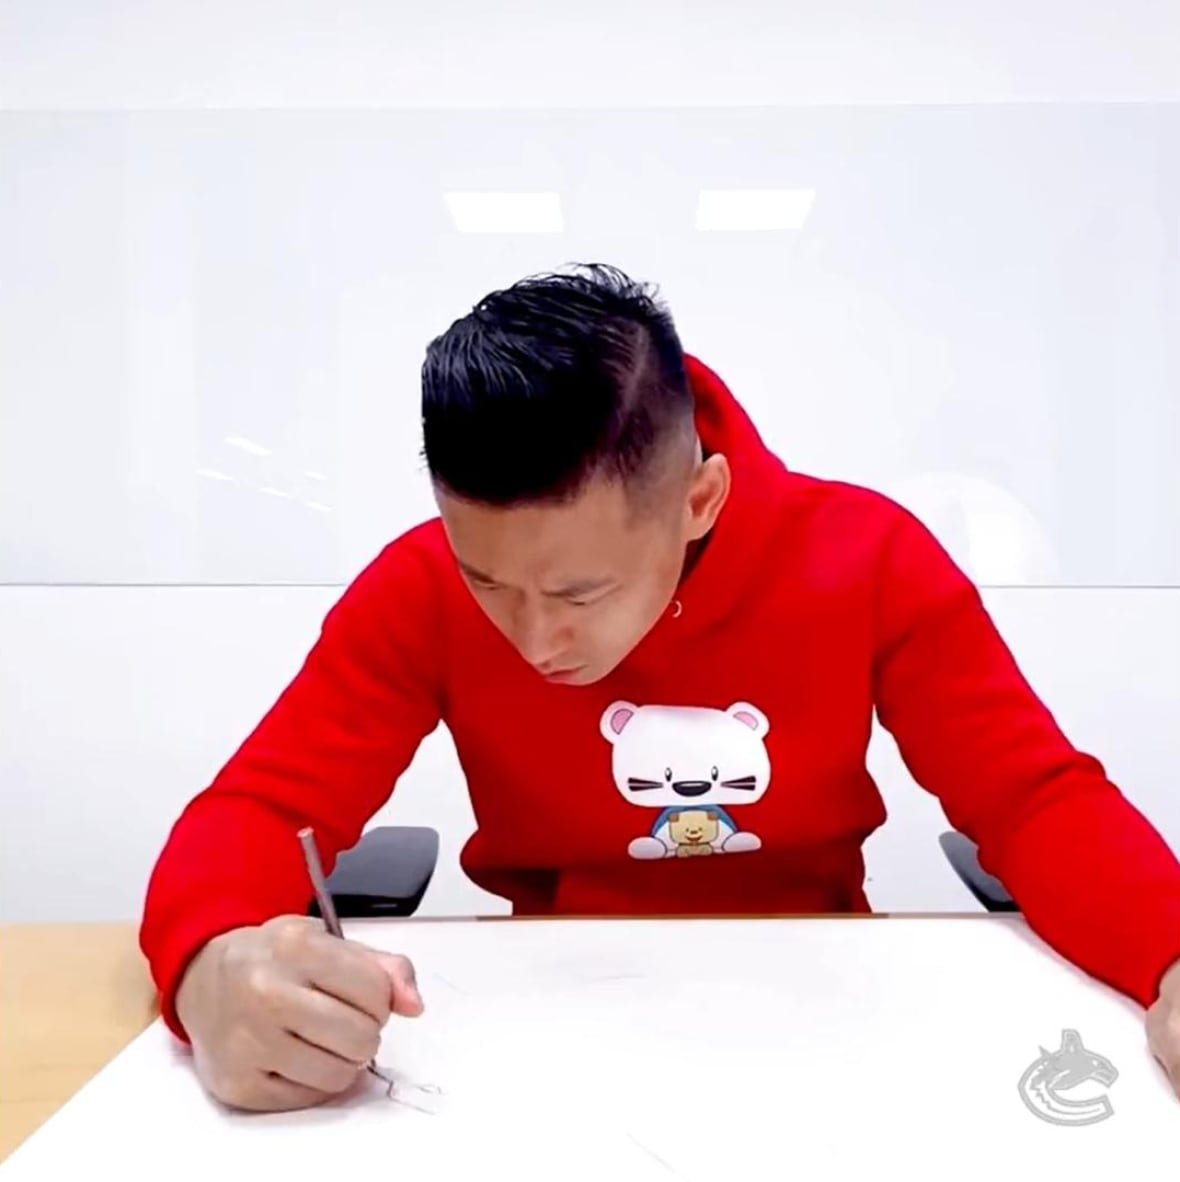 Artist Trevor Lai designs Vancouver Canucks' 2022 Lunar New Year warm-up  jerseys — Stir